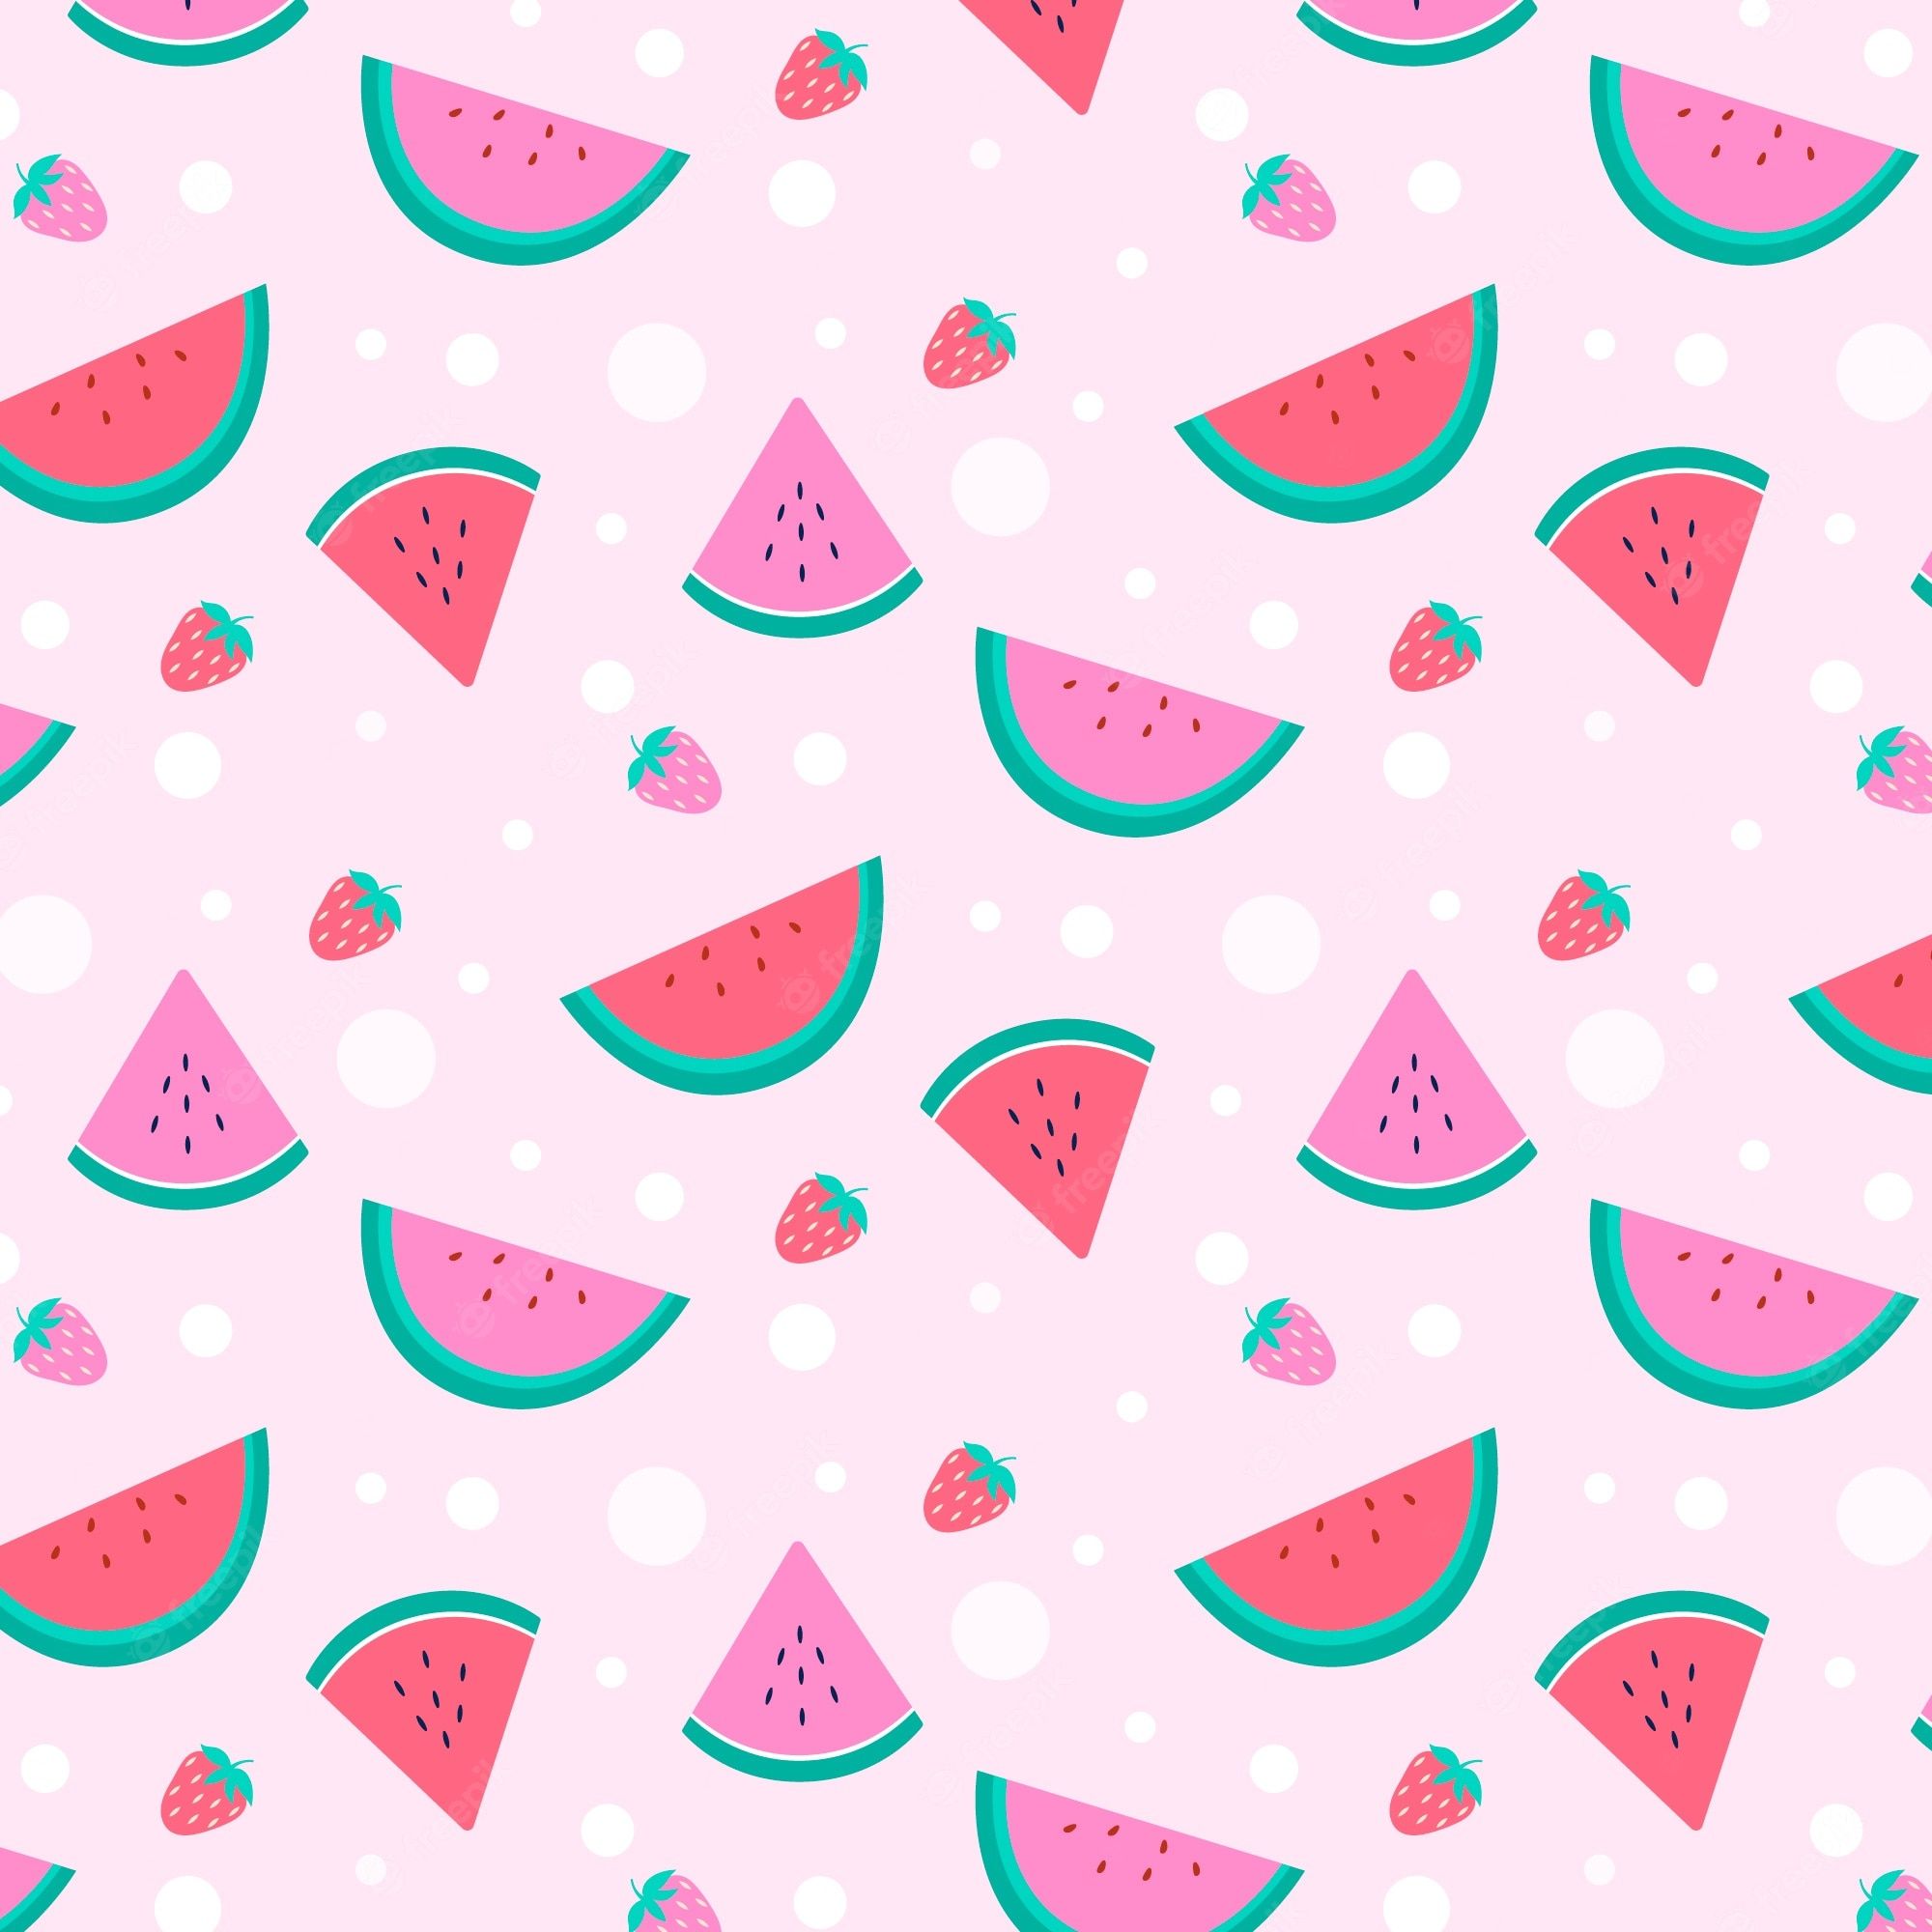 Cute Watermelon Wallpaper Image